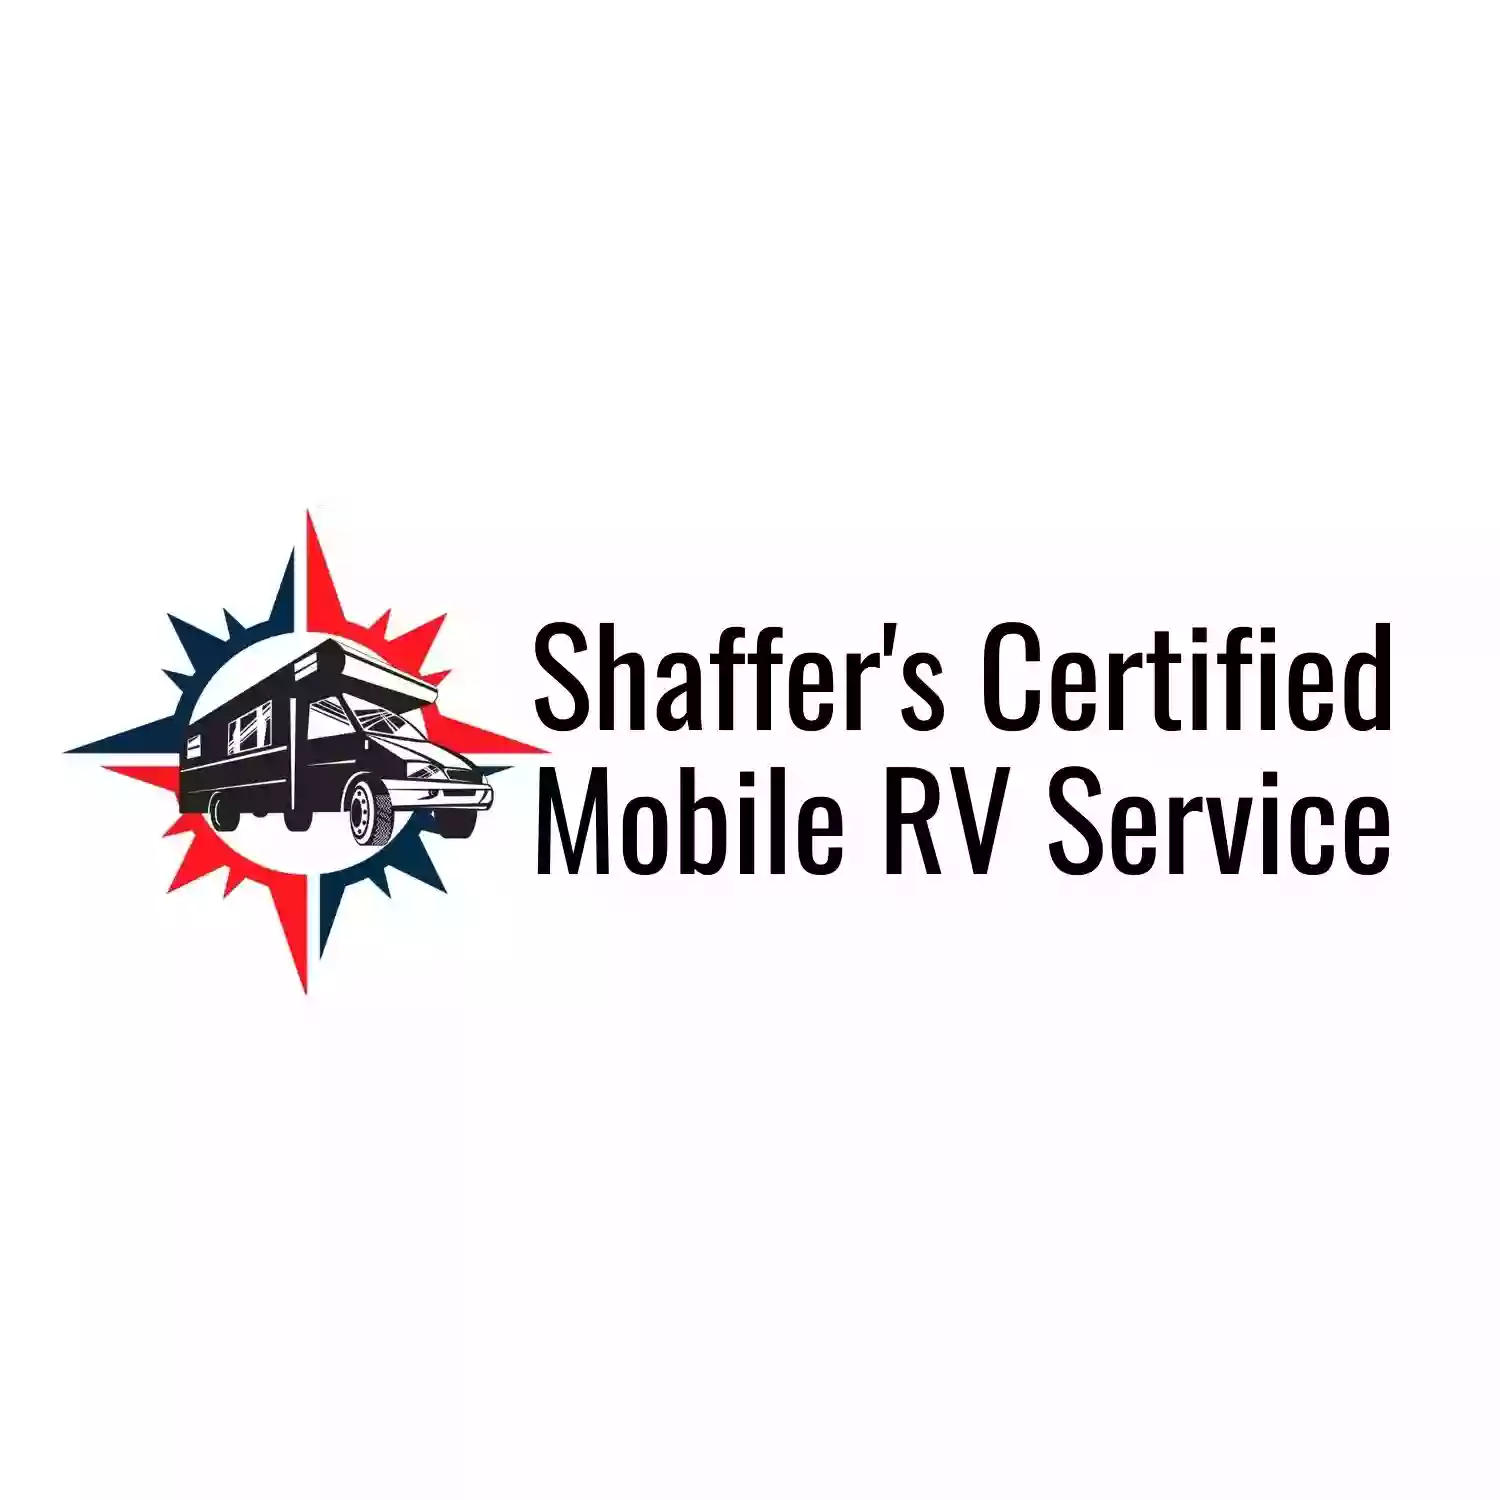 Shaffer's Certified Mobile RV Service, LLC